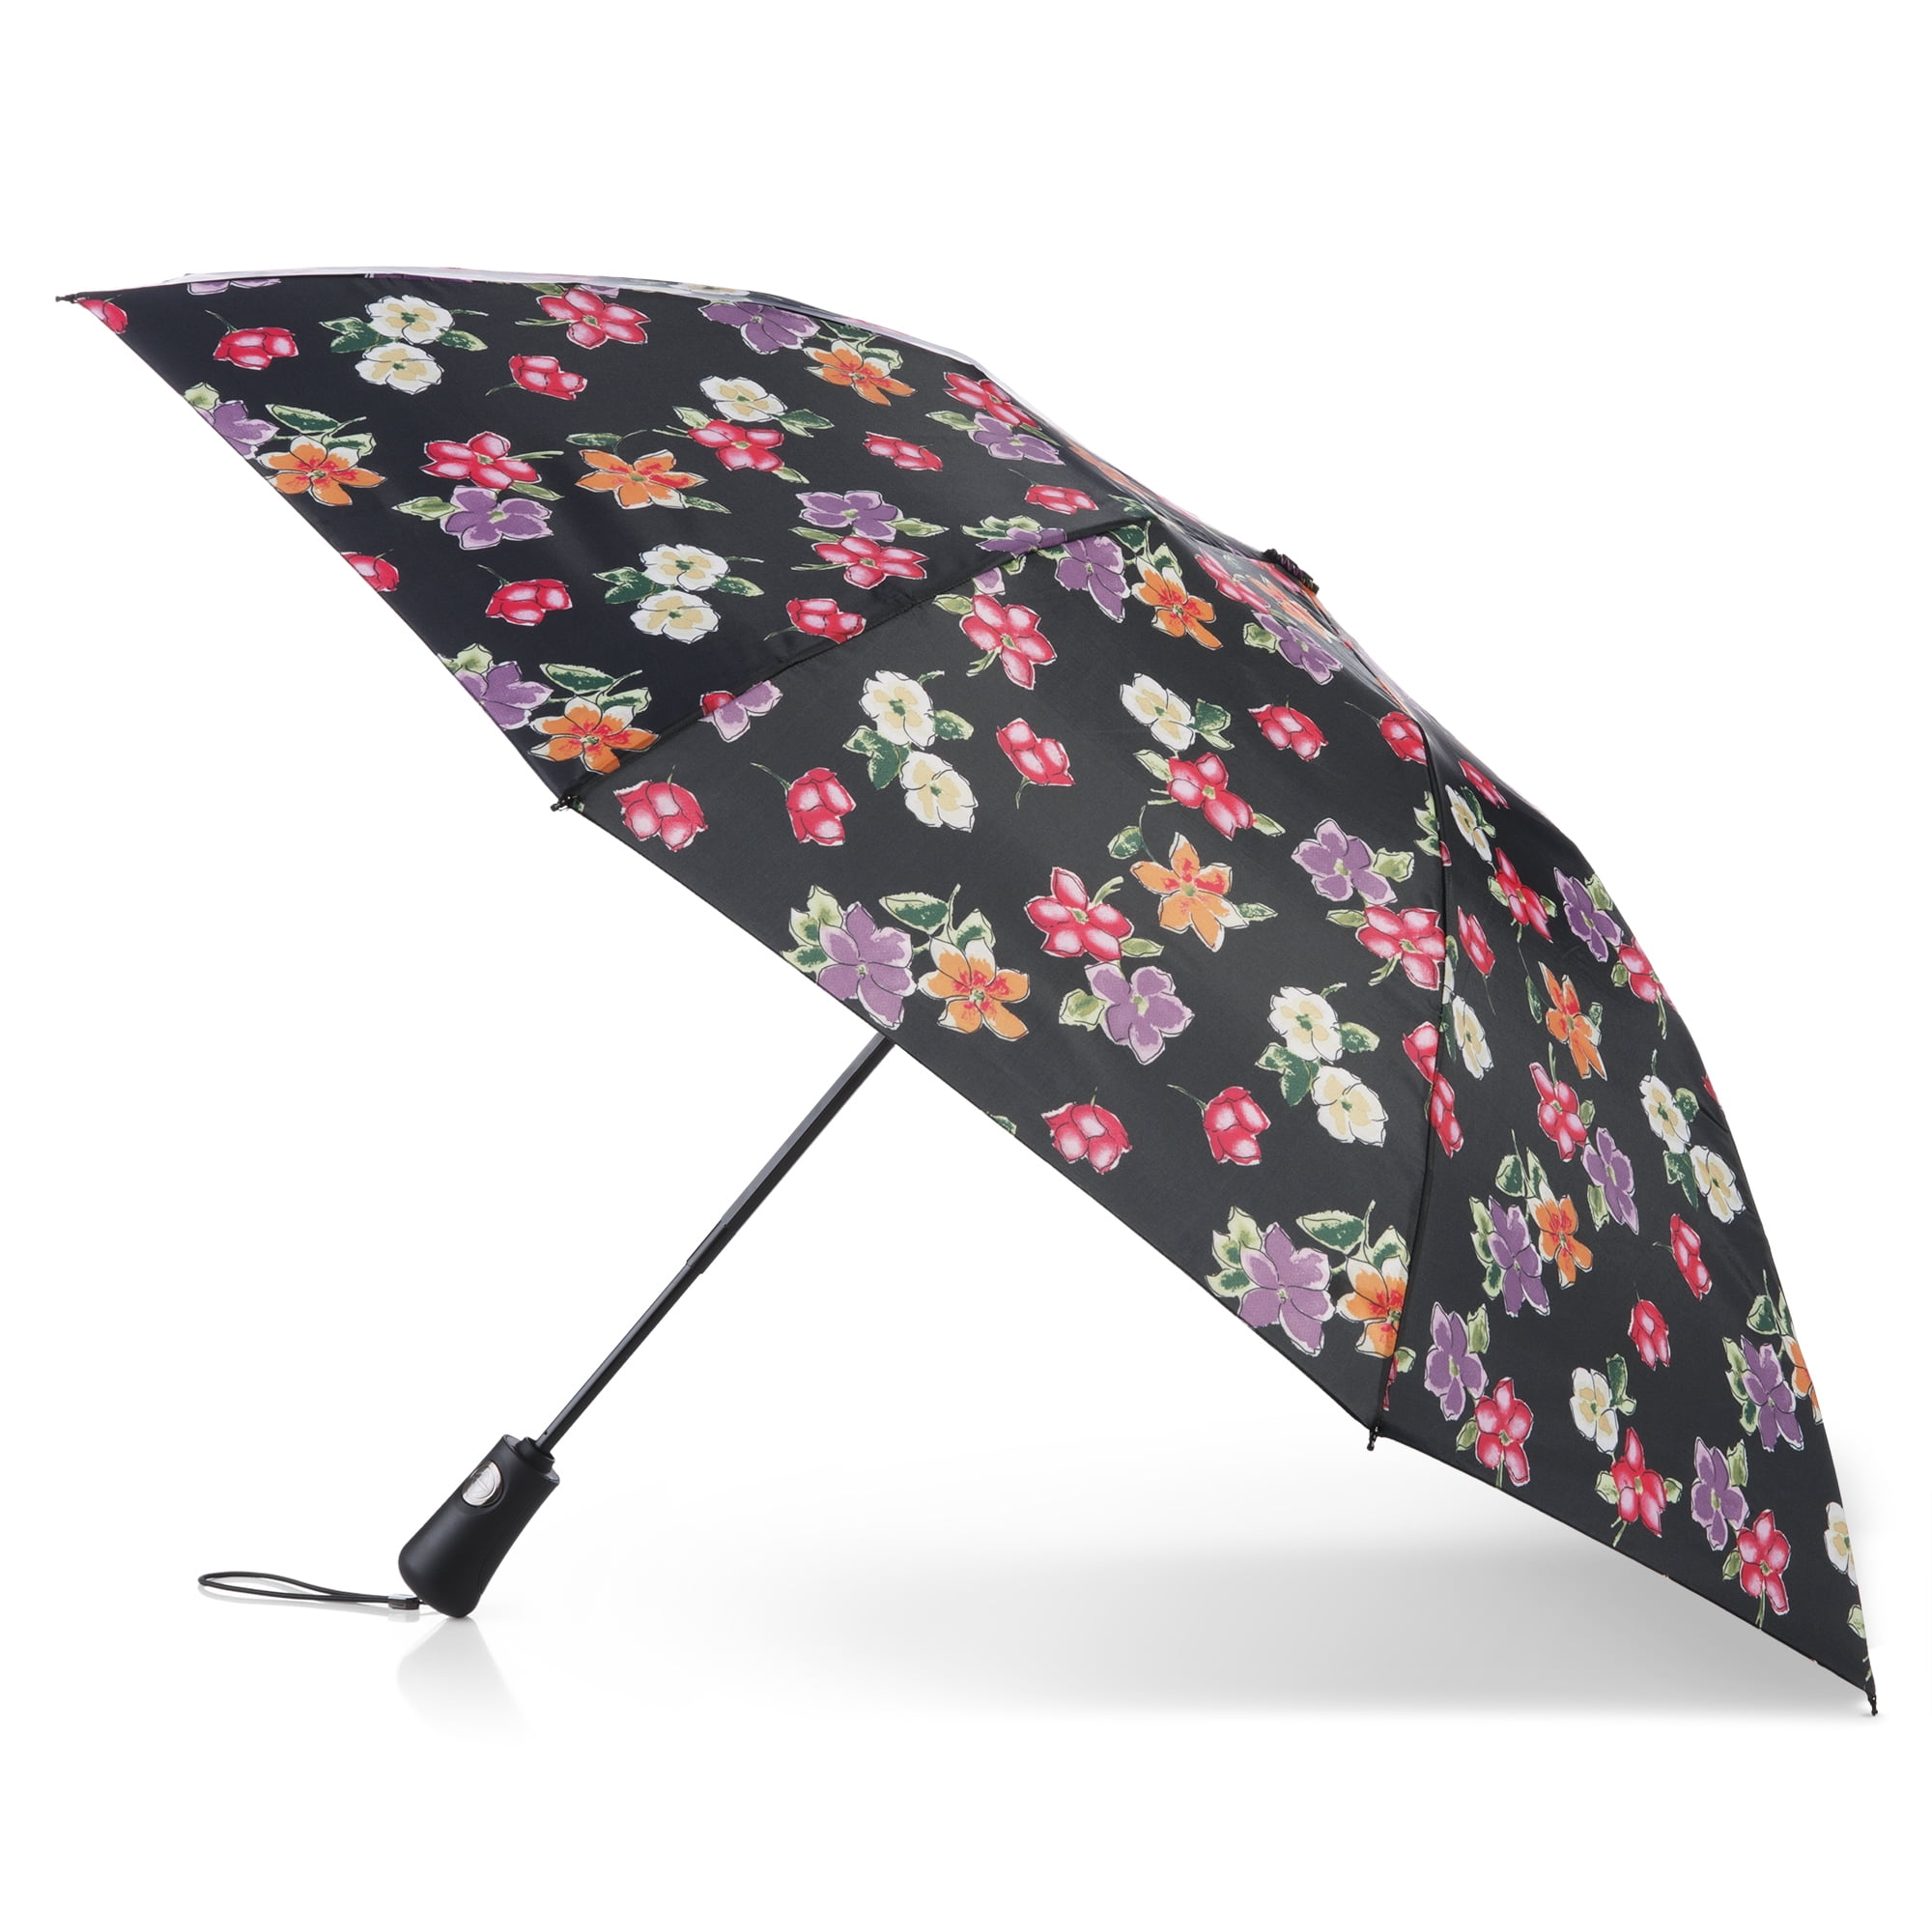 totes Recycled Canopy Auto Open & Reverse Close Compact Inbrella Umbrella